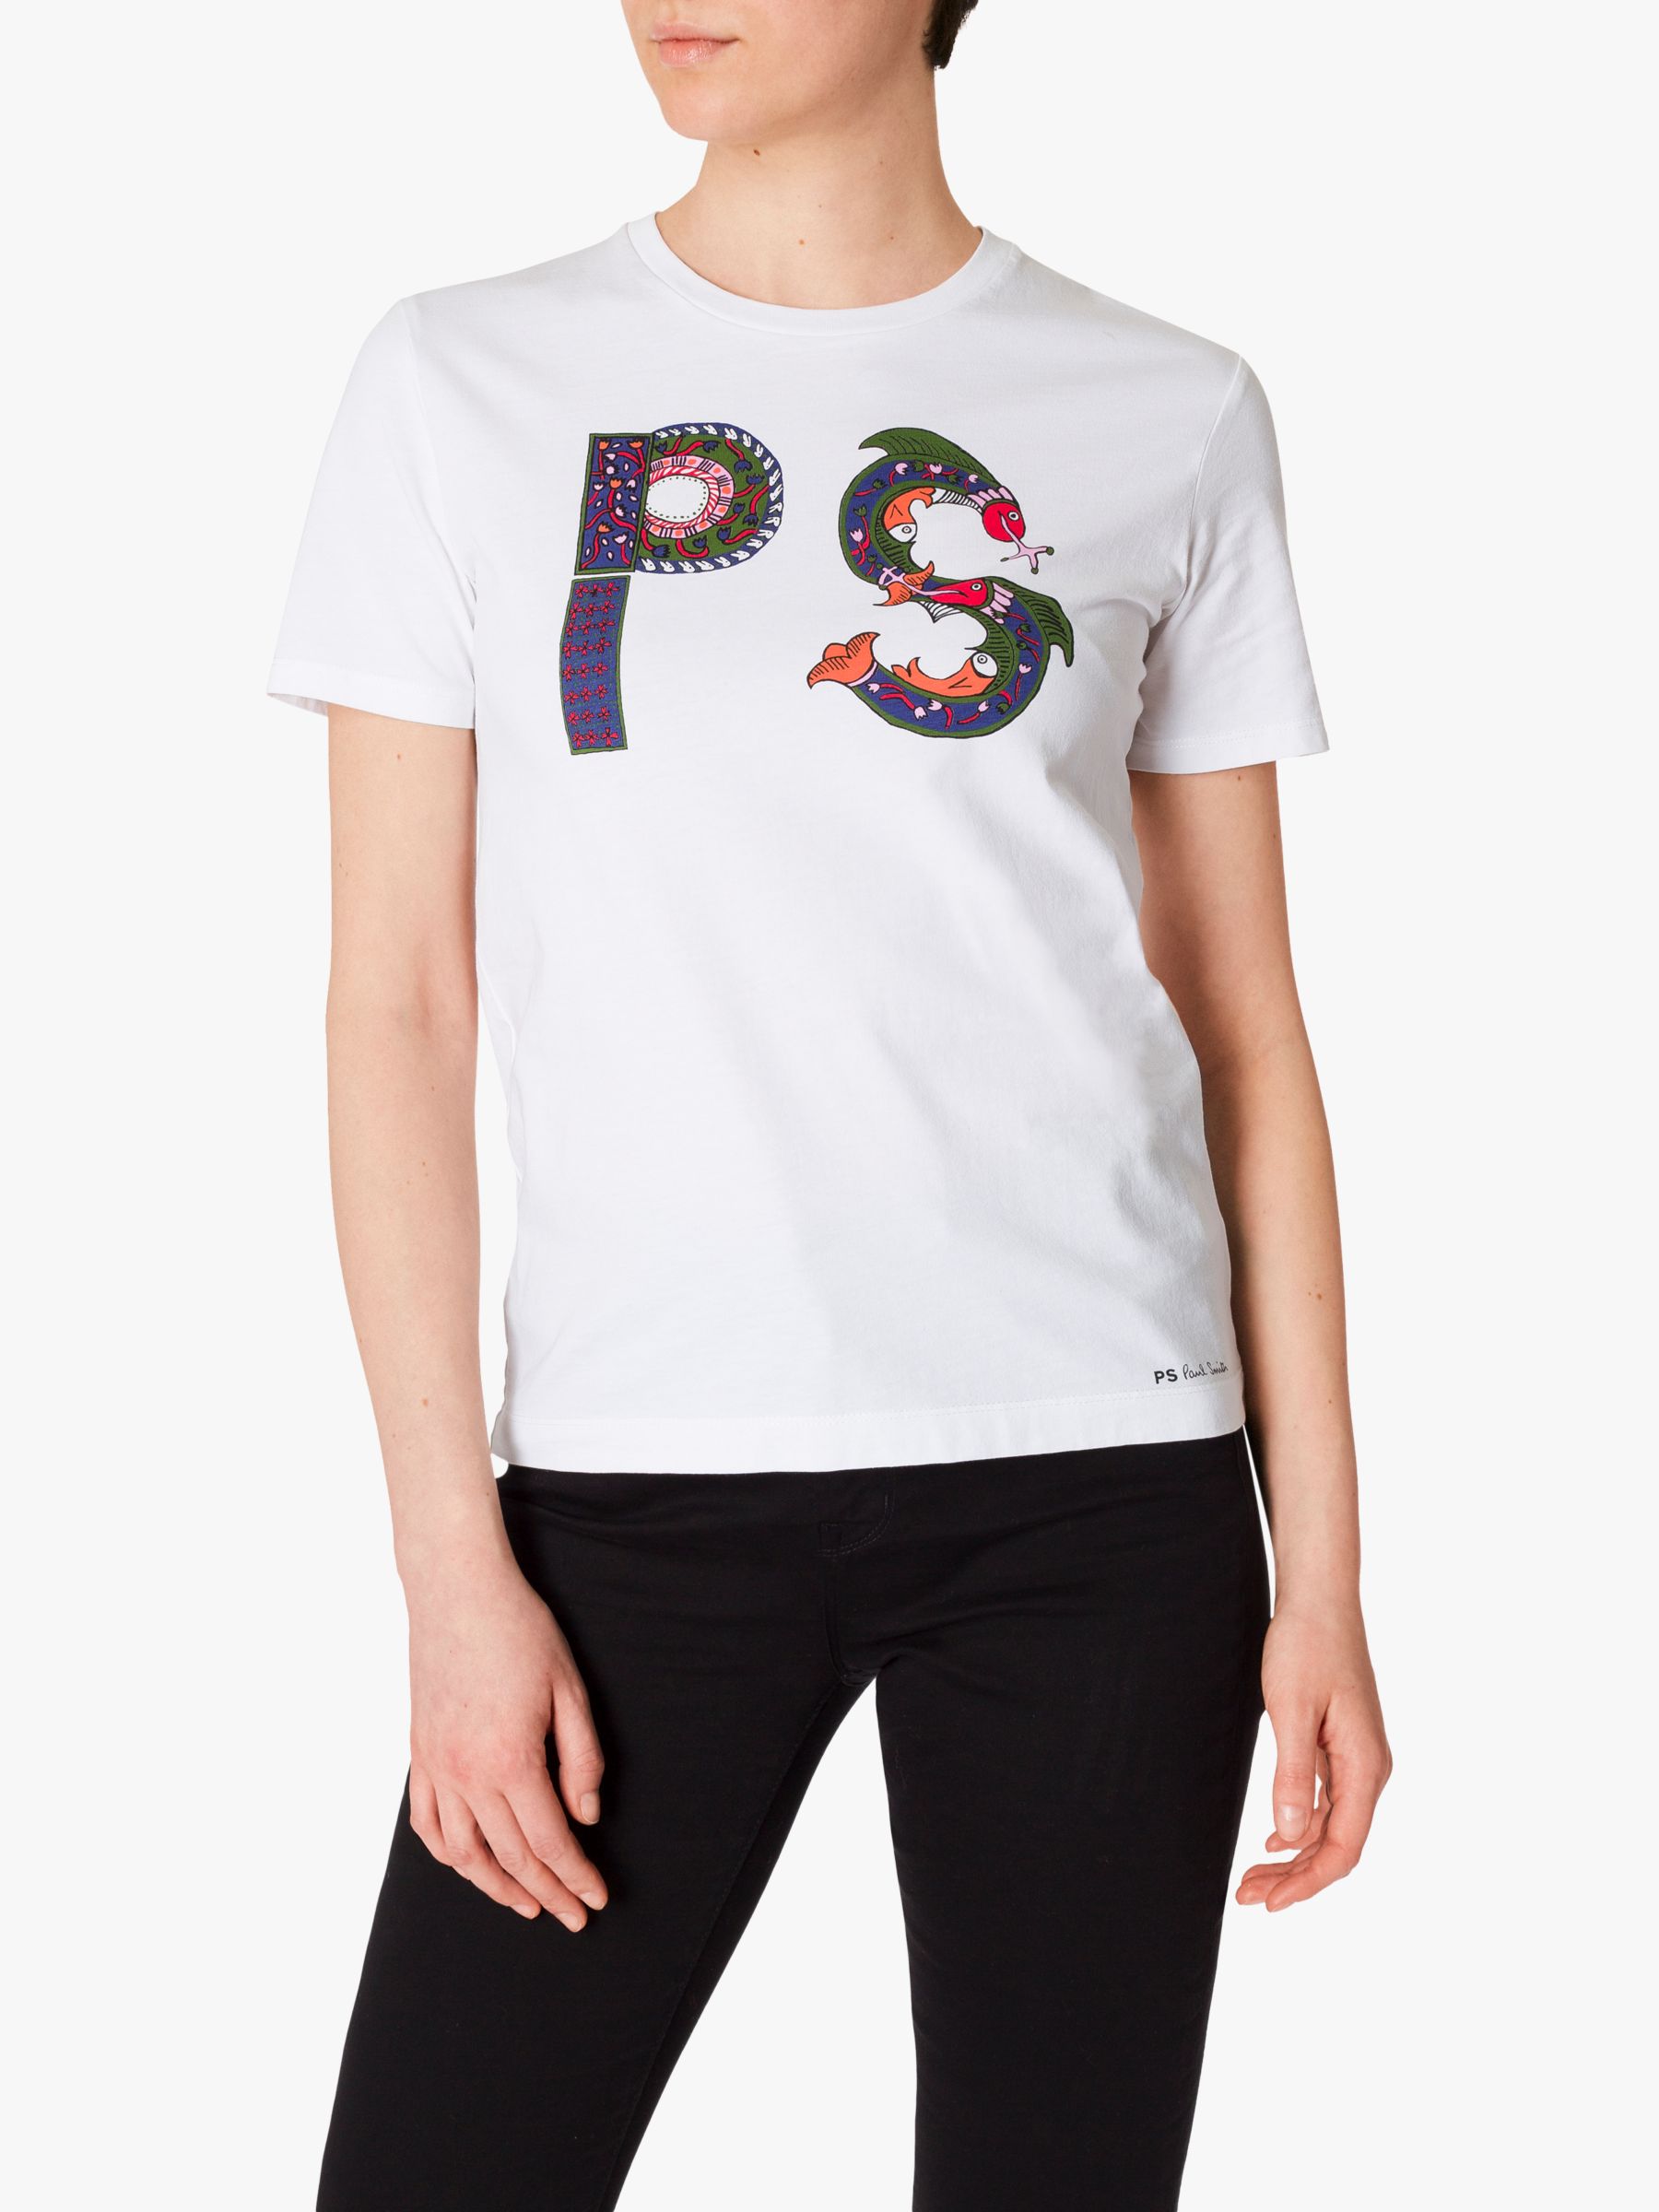 PS Paul Smith Illustration T-Shirt, White